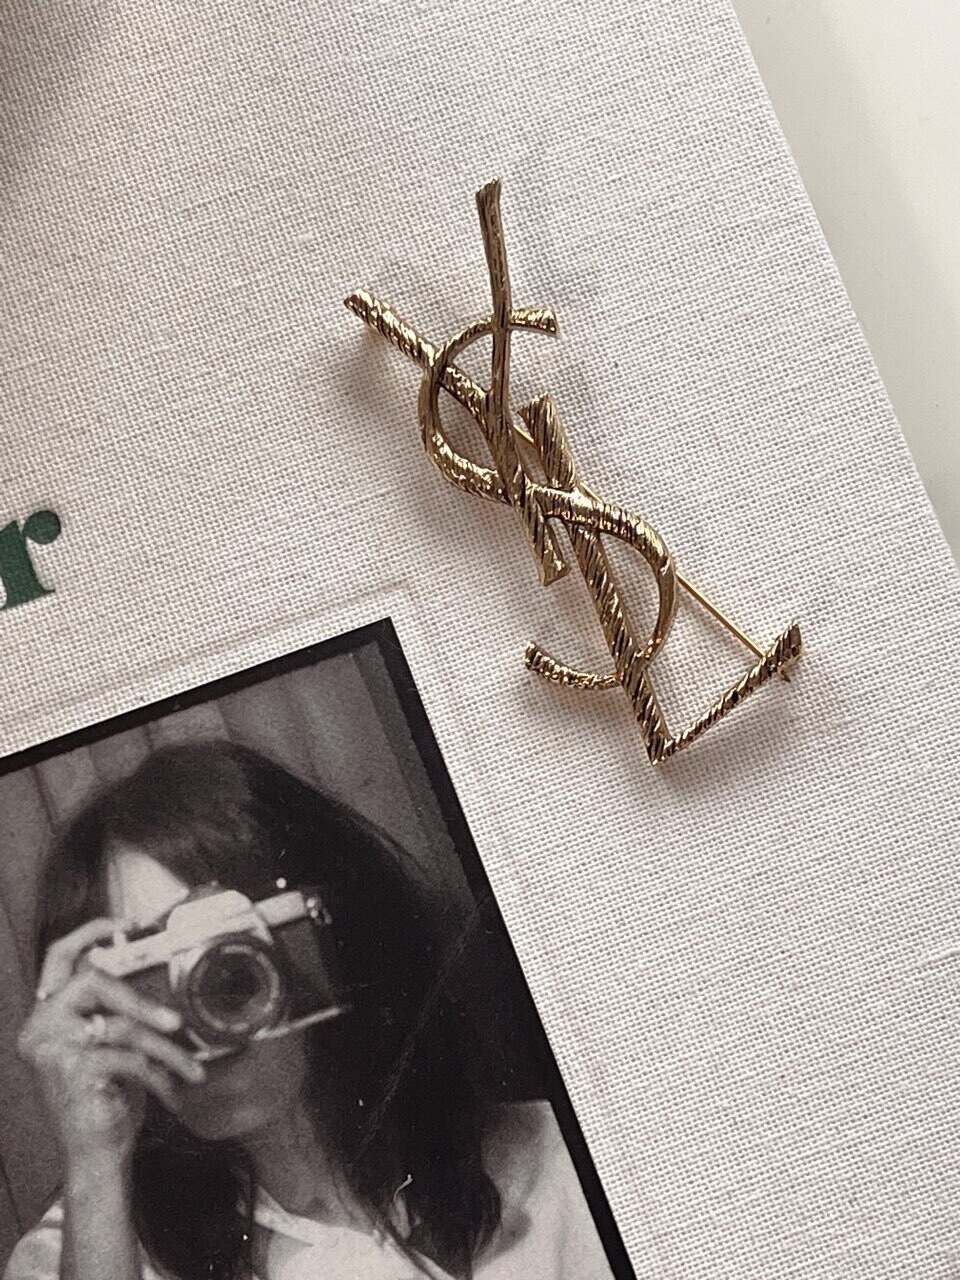 BujorJapan Vintage Ysl Yves Saint Laurent Brooch Pin, Ysl Logo Brooch, Gold Tone Brooch Pin, Vintage Jewelry, Jewelry Brooch, Jewelry for Women